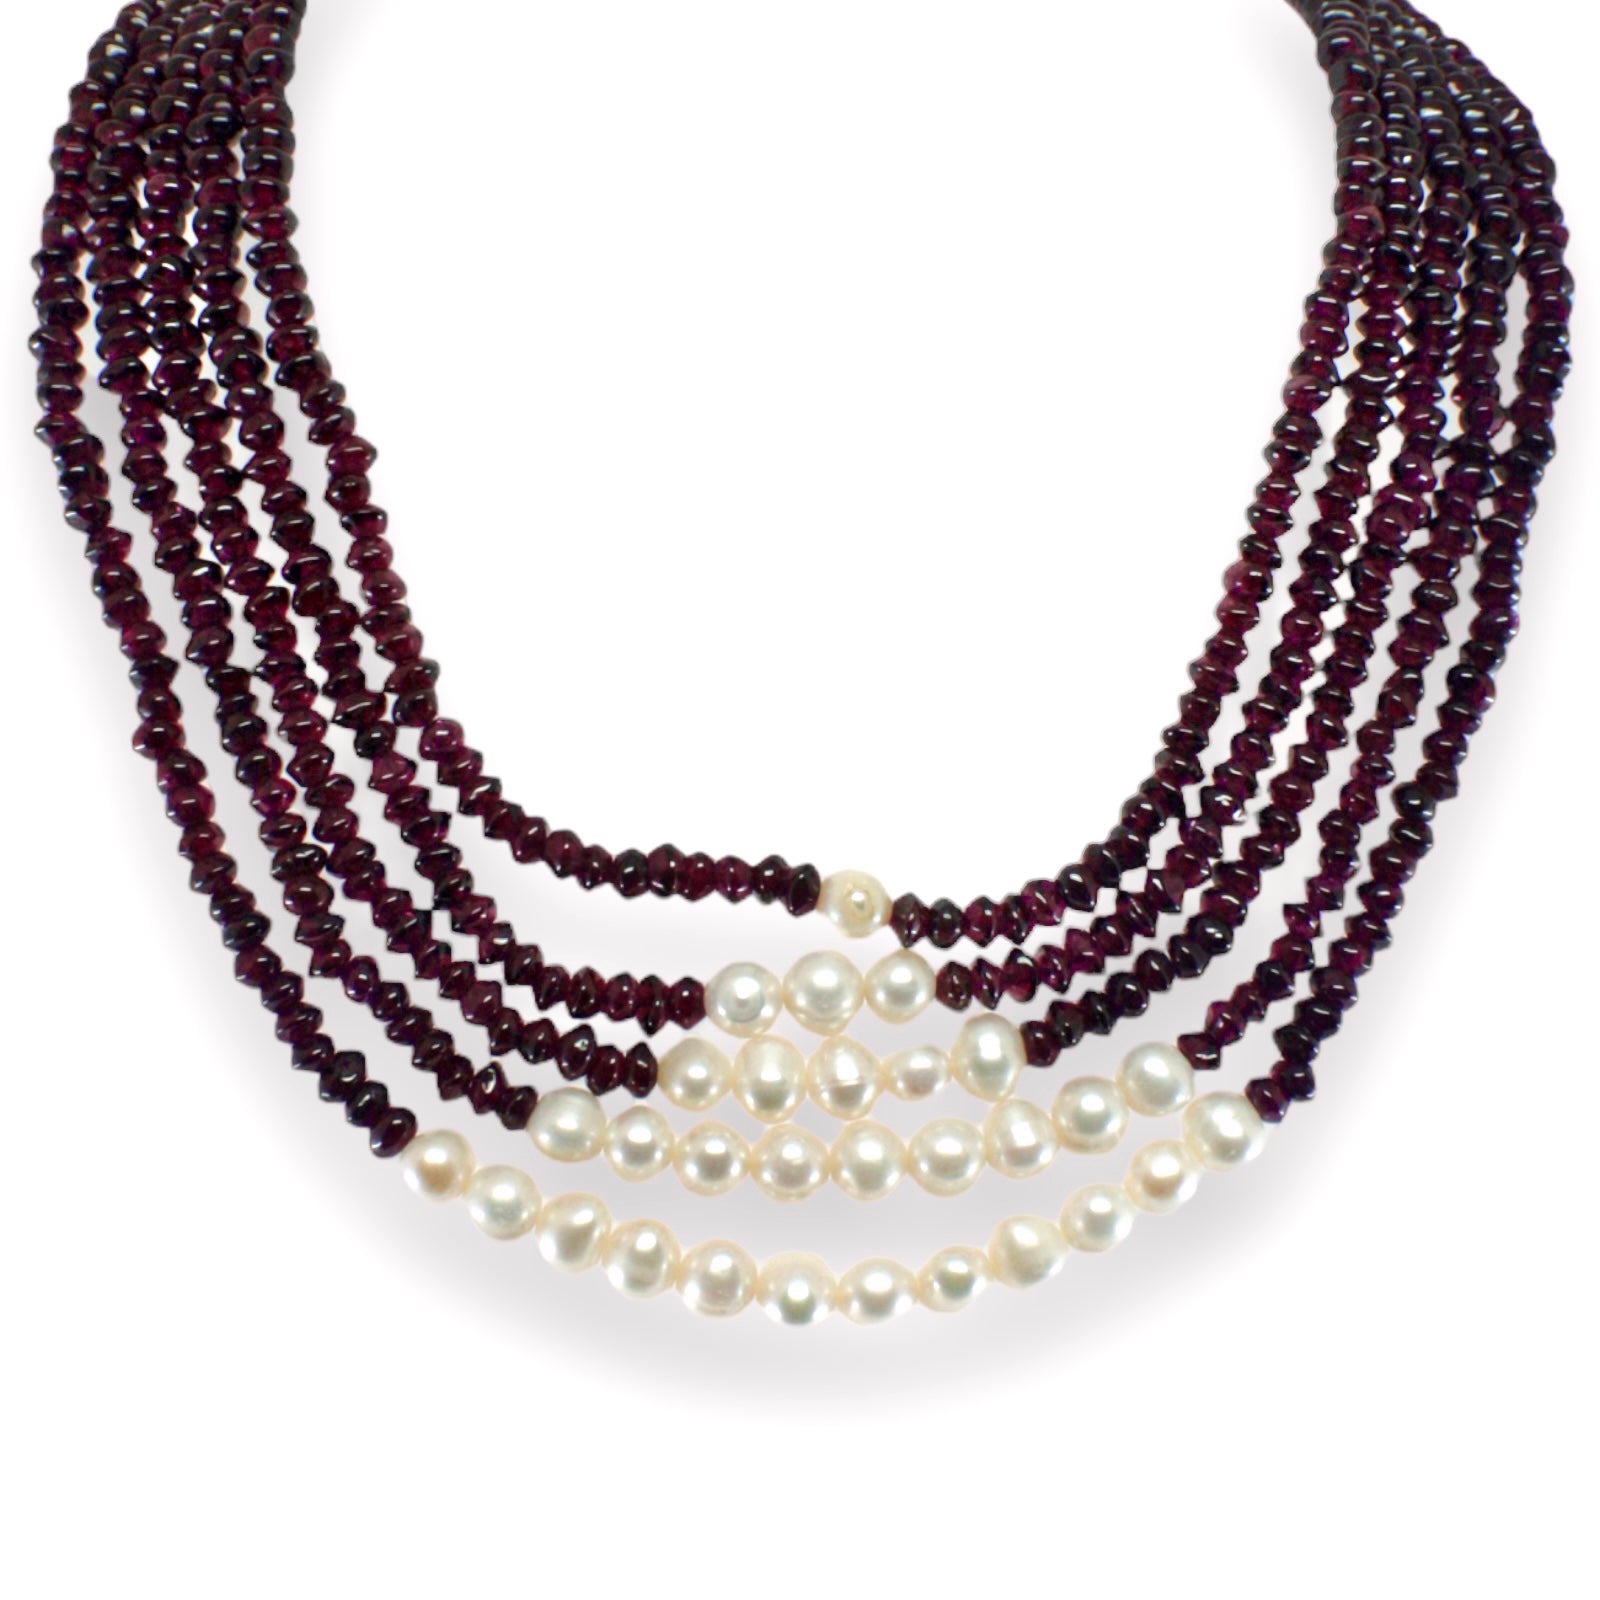 Natural Handmade Necklace 16"-18" Rondelle Garnet Pearls Birthstone Gem Beads Jewellery